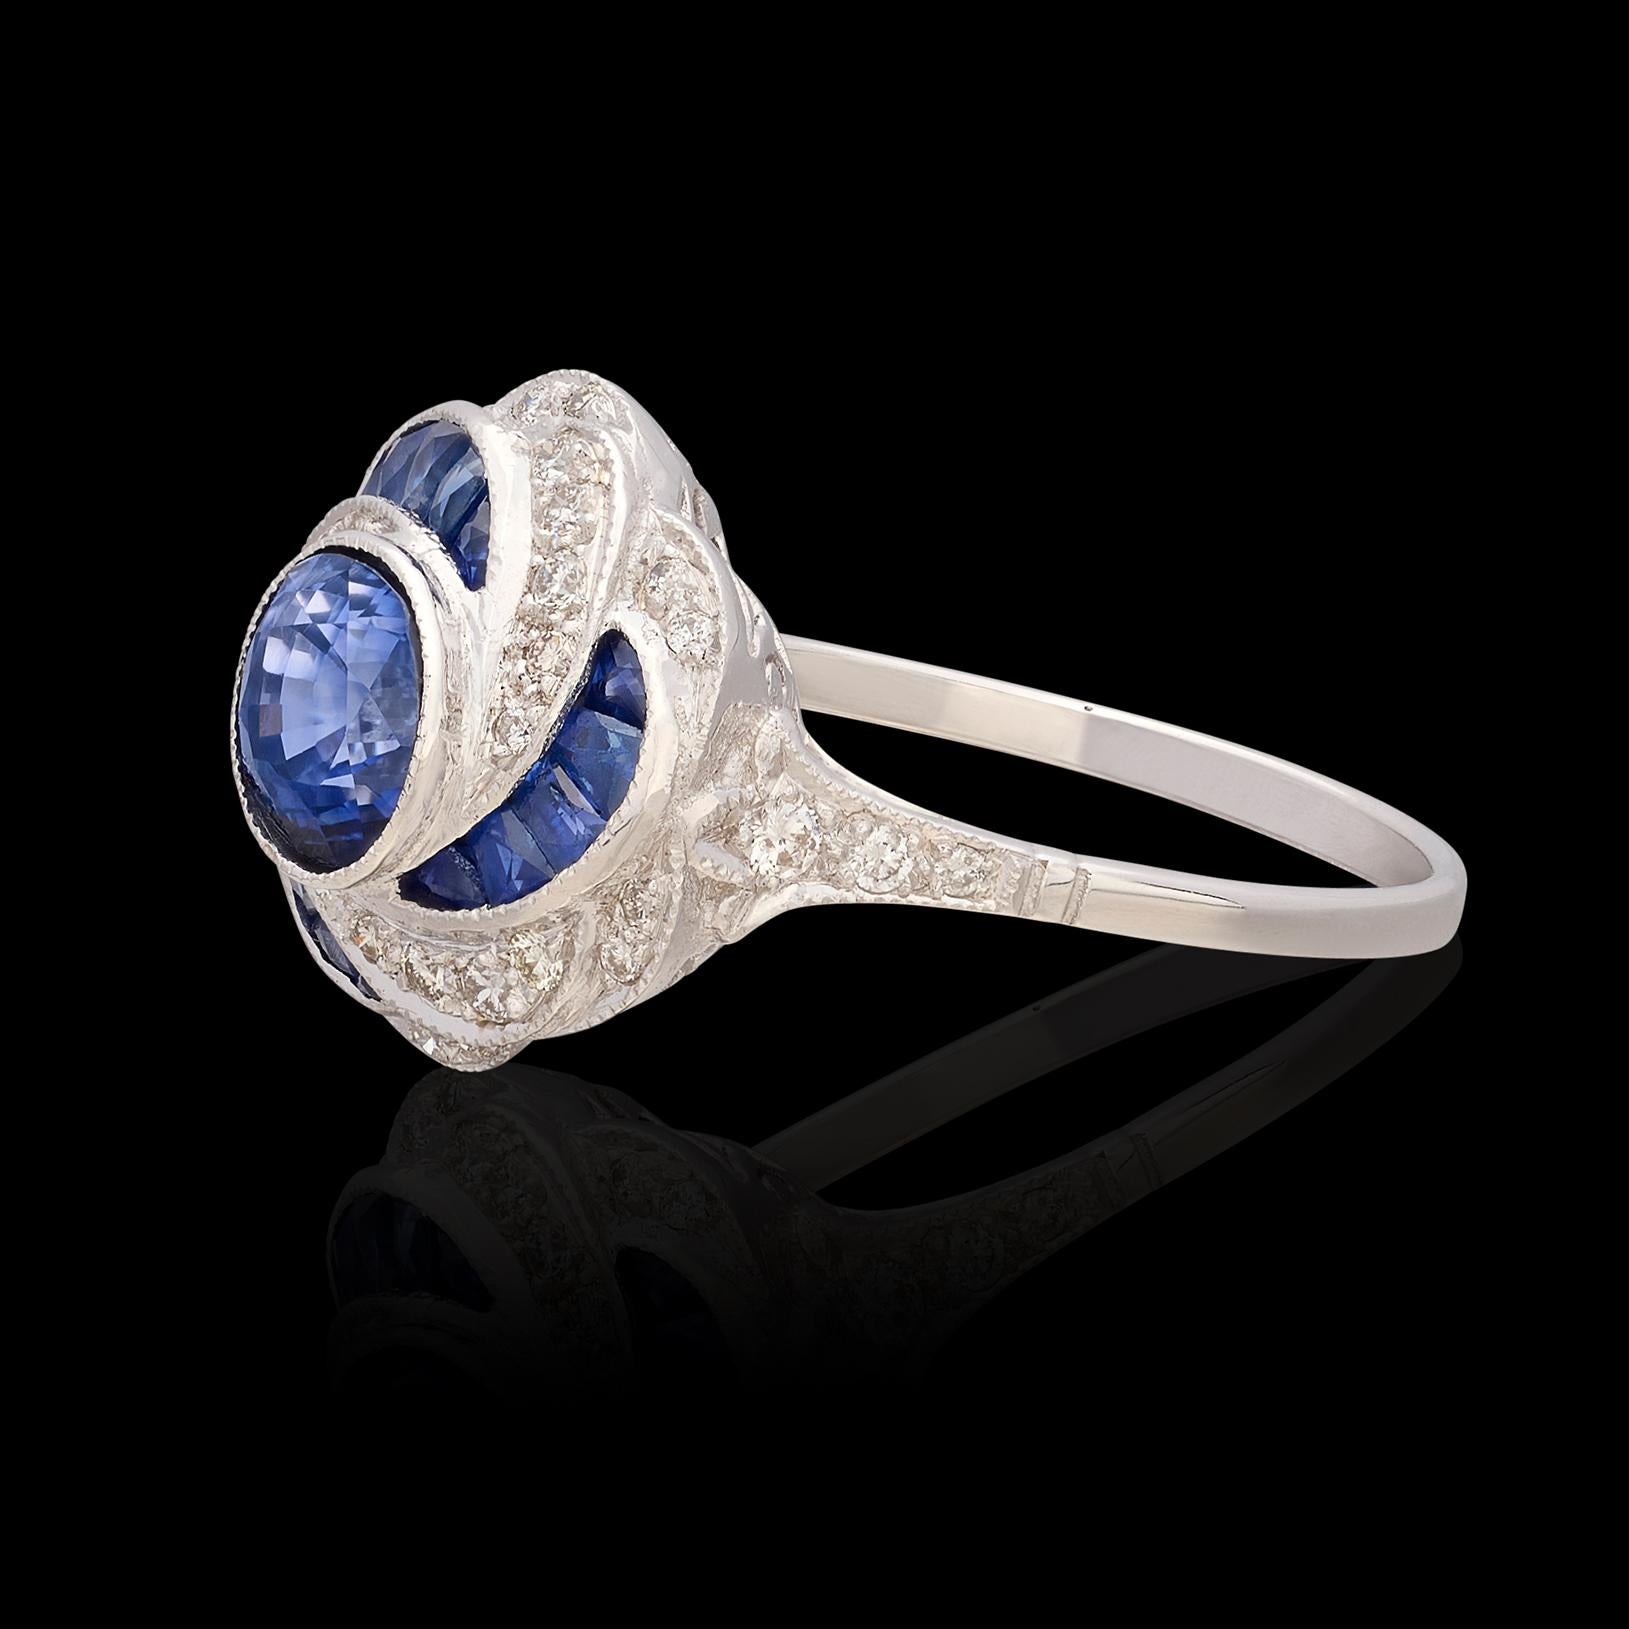 Unique Art Deco Inspired Sapphire & Diamond 18k Ring In New Condition For Sale In San Francisco, CA